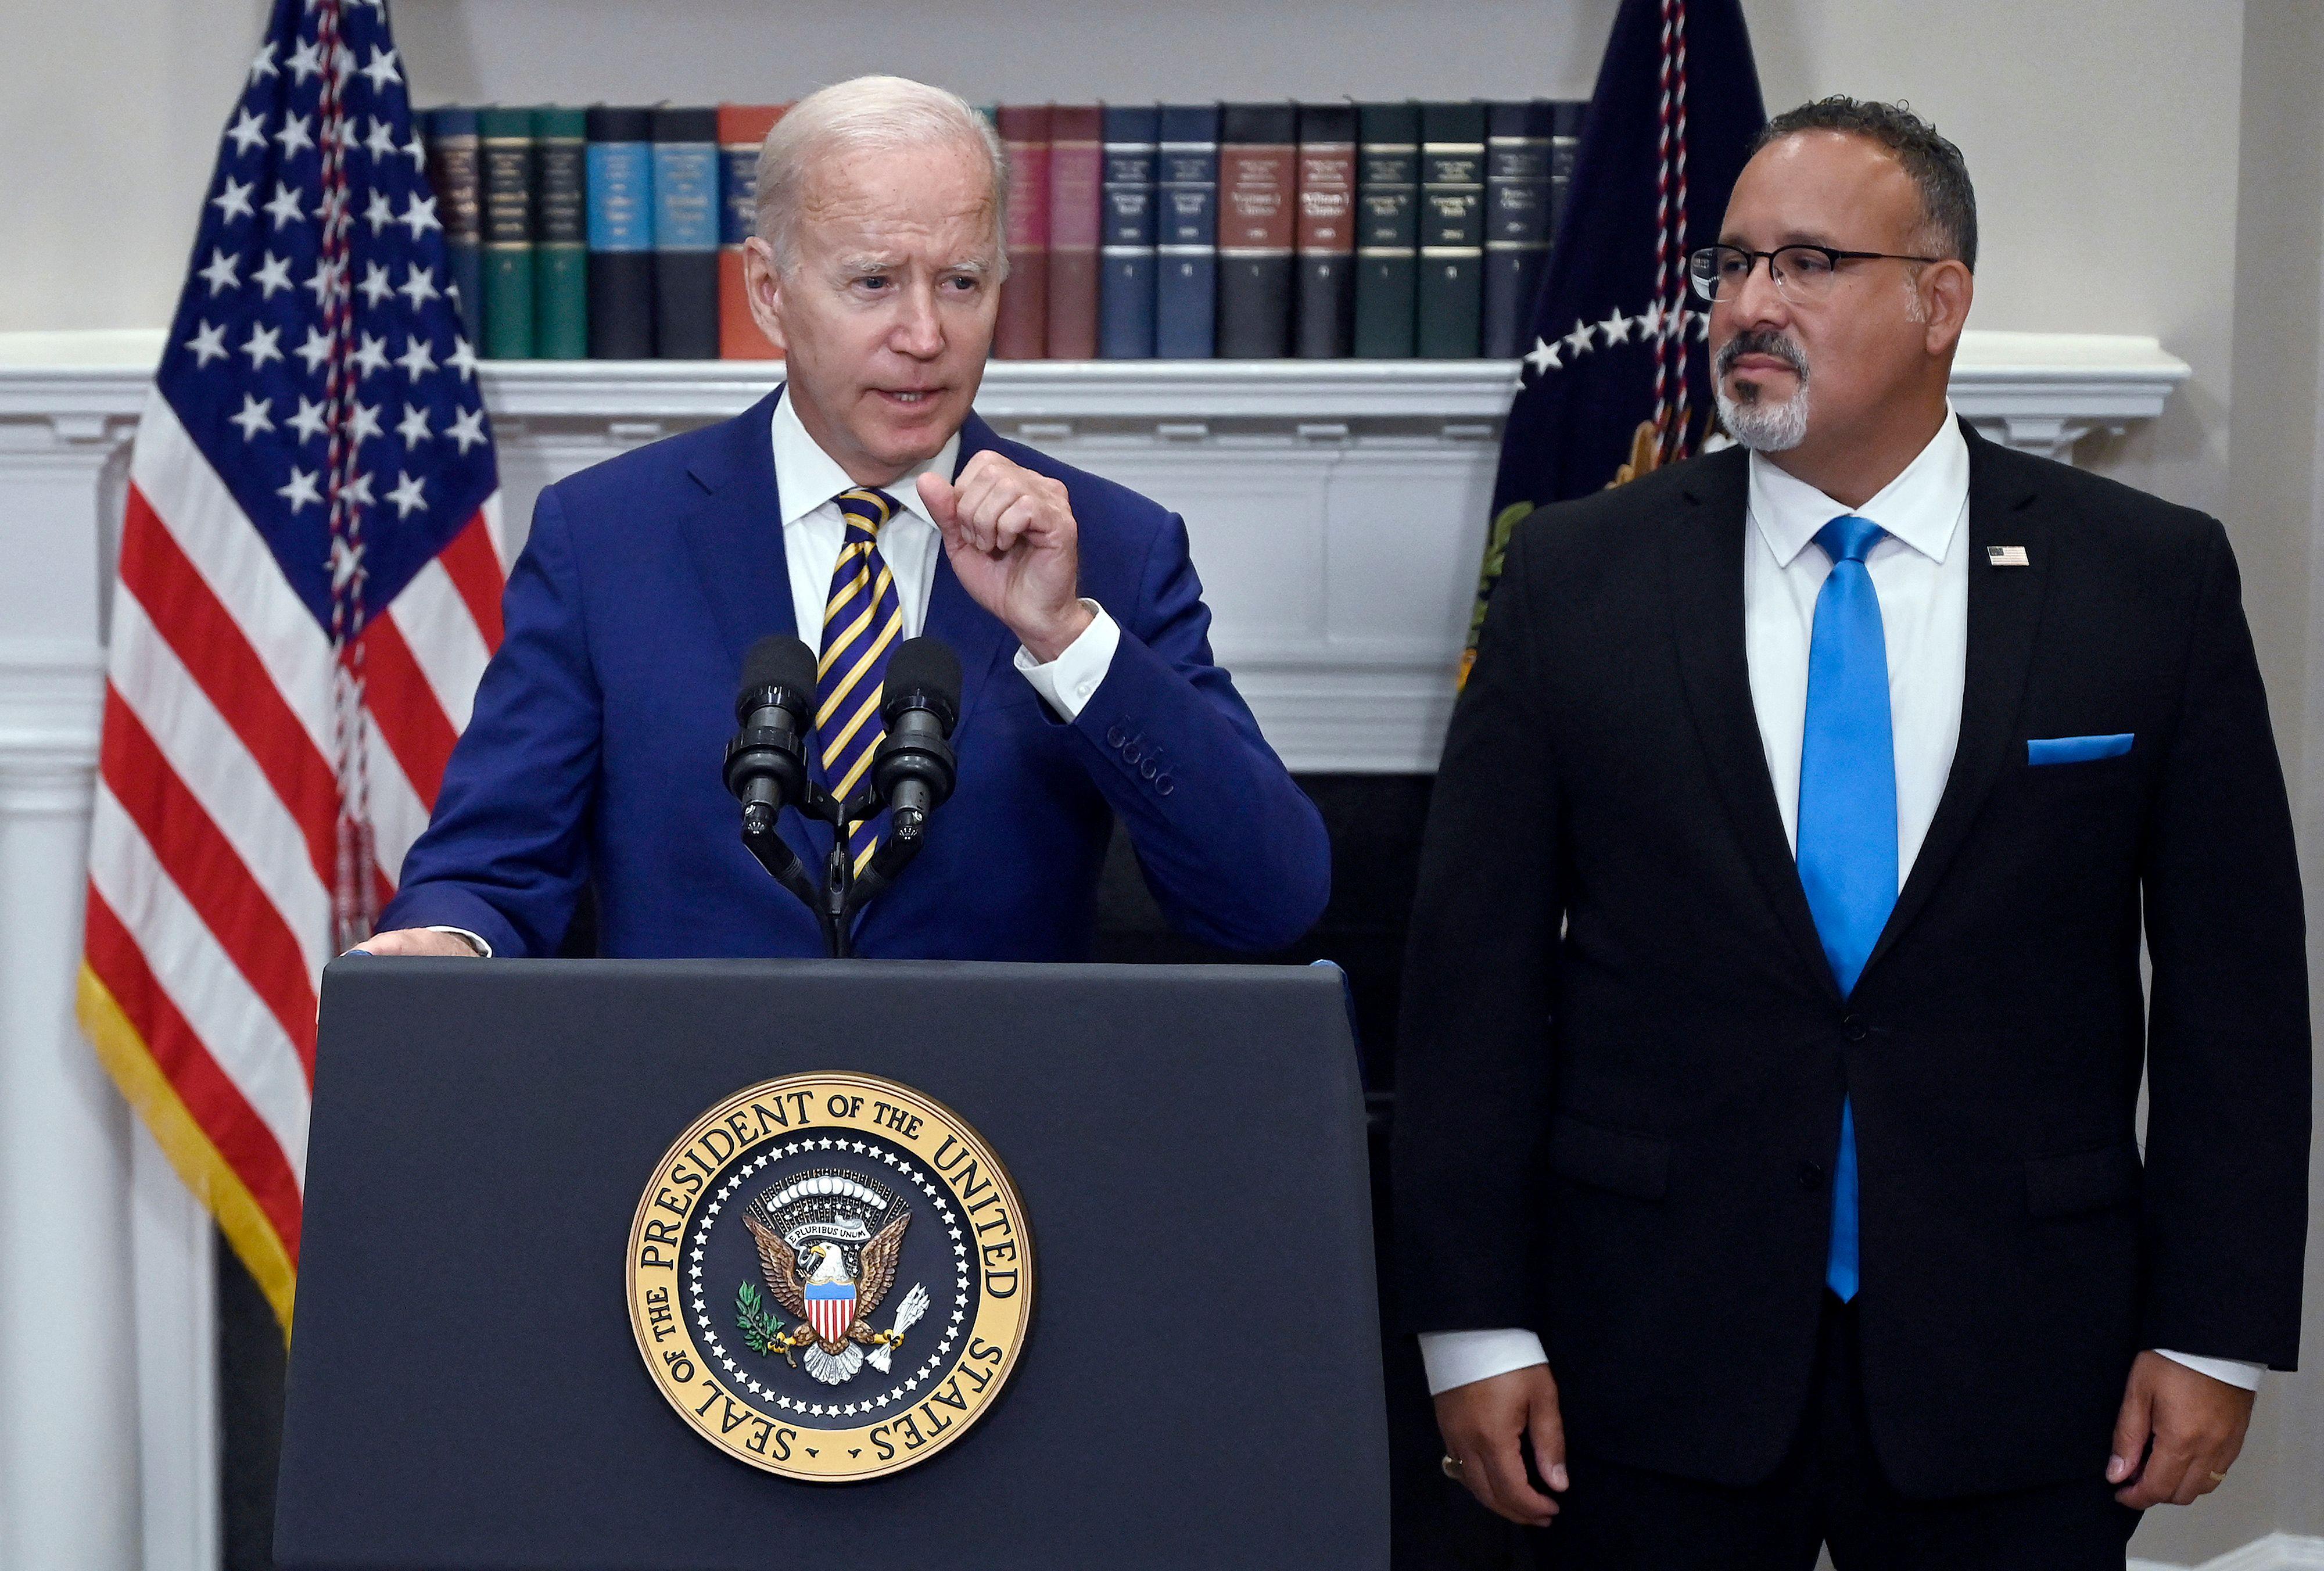 Biden speaks at a podium while Cardona looks on.